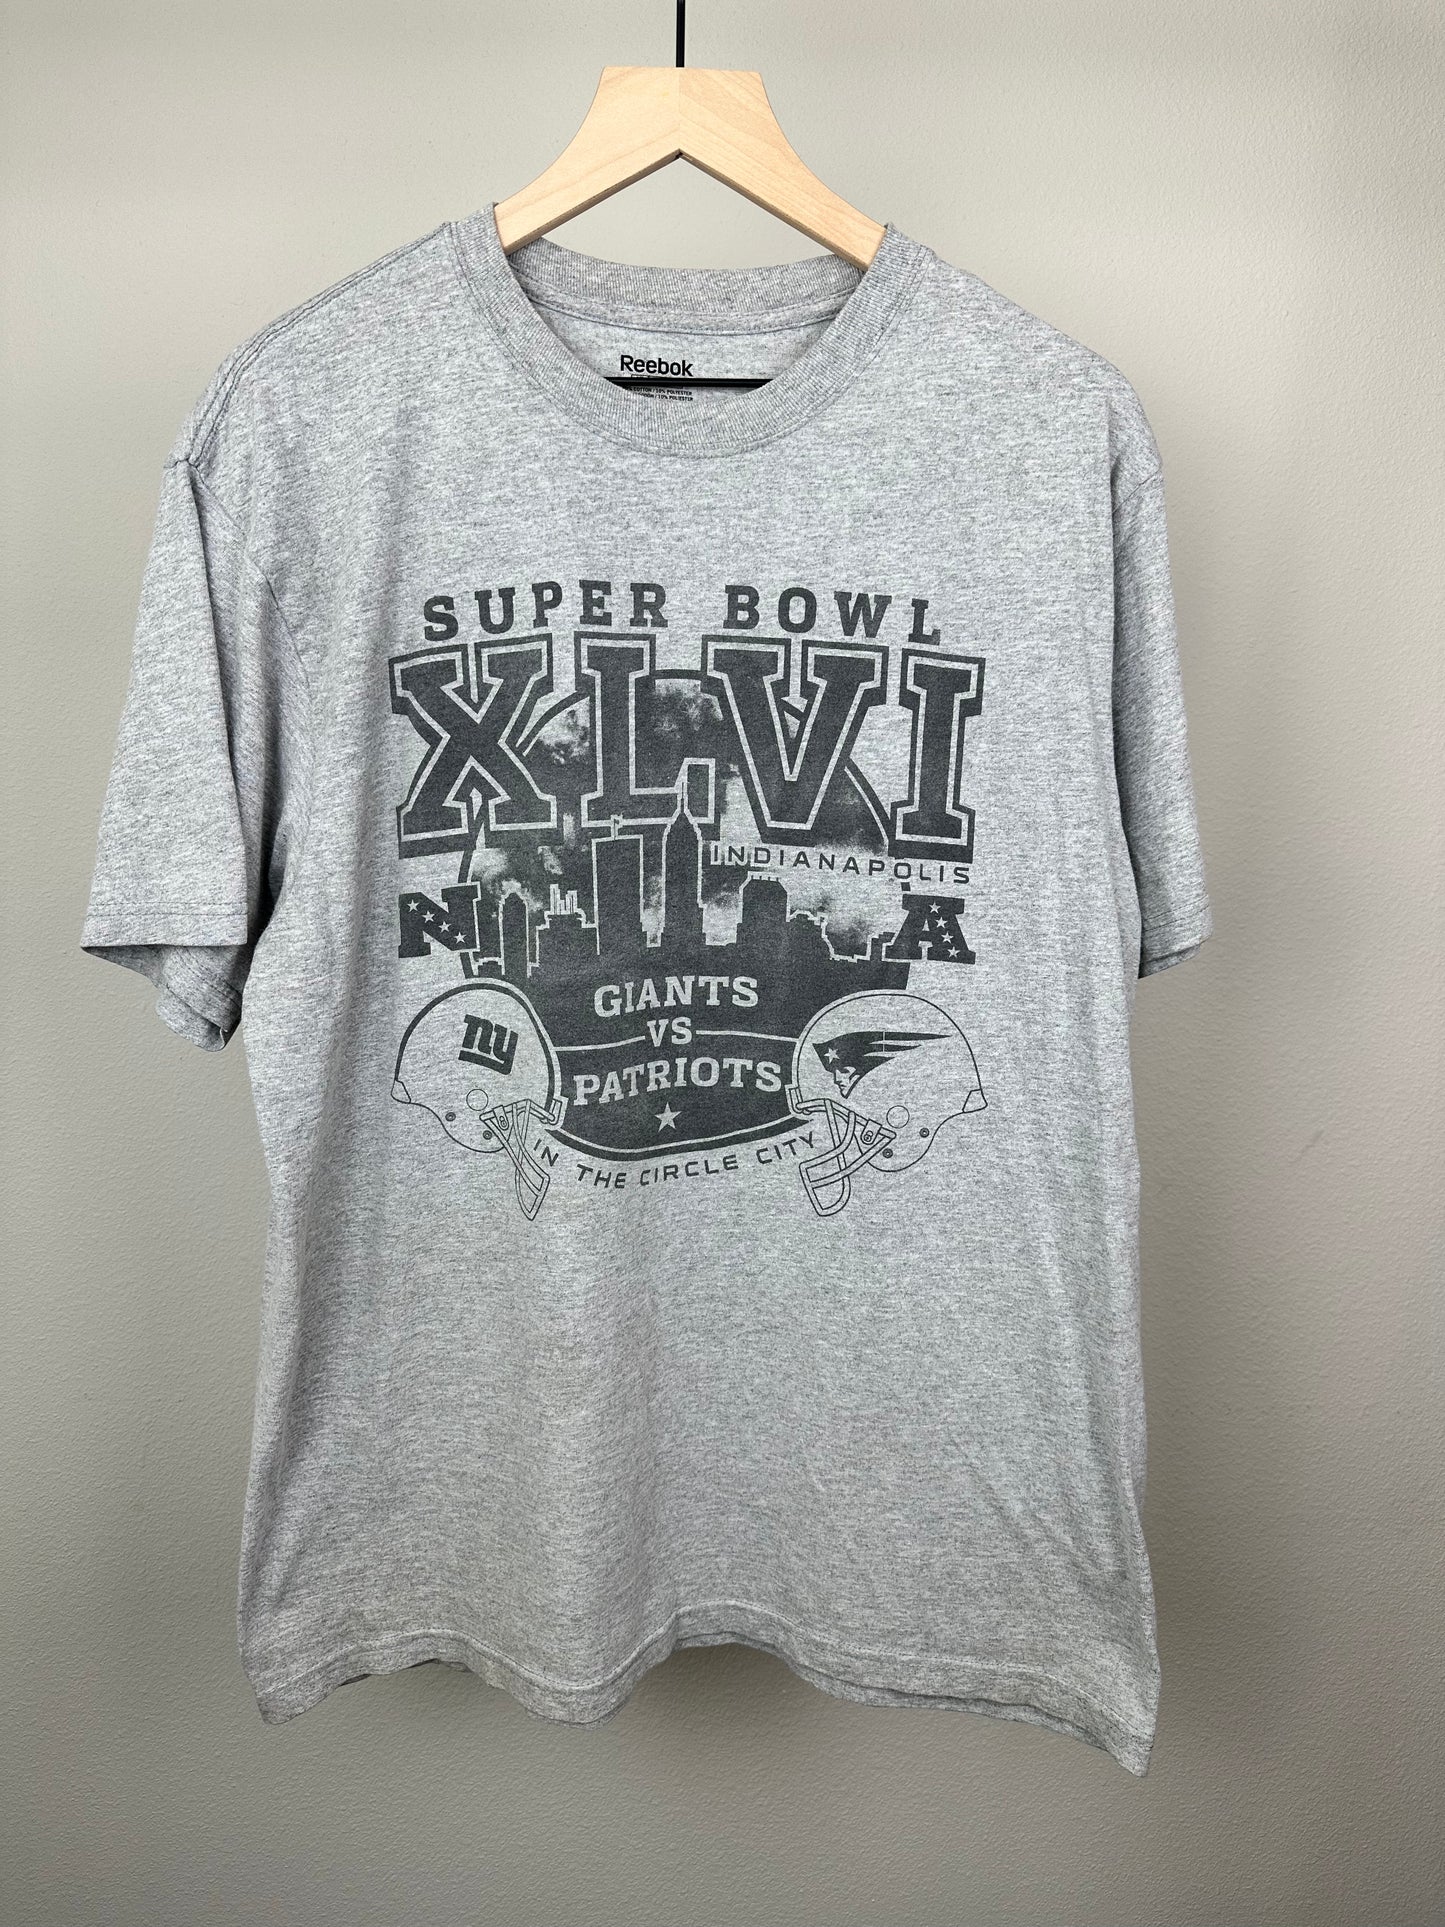 Superbowl XLVI - Patriots vs Giants